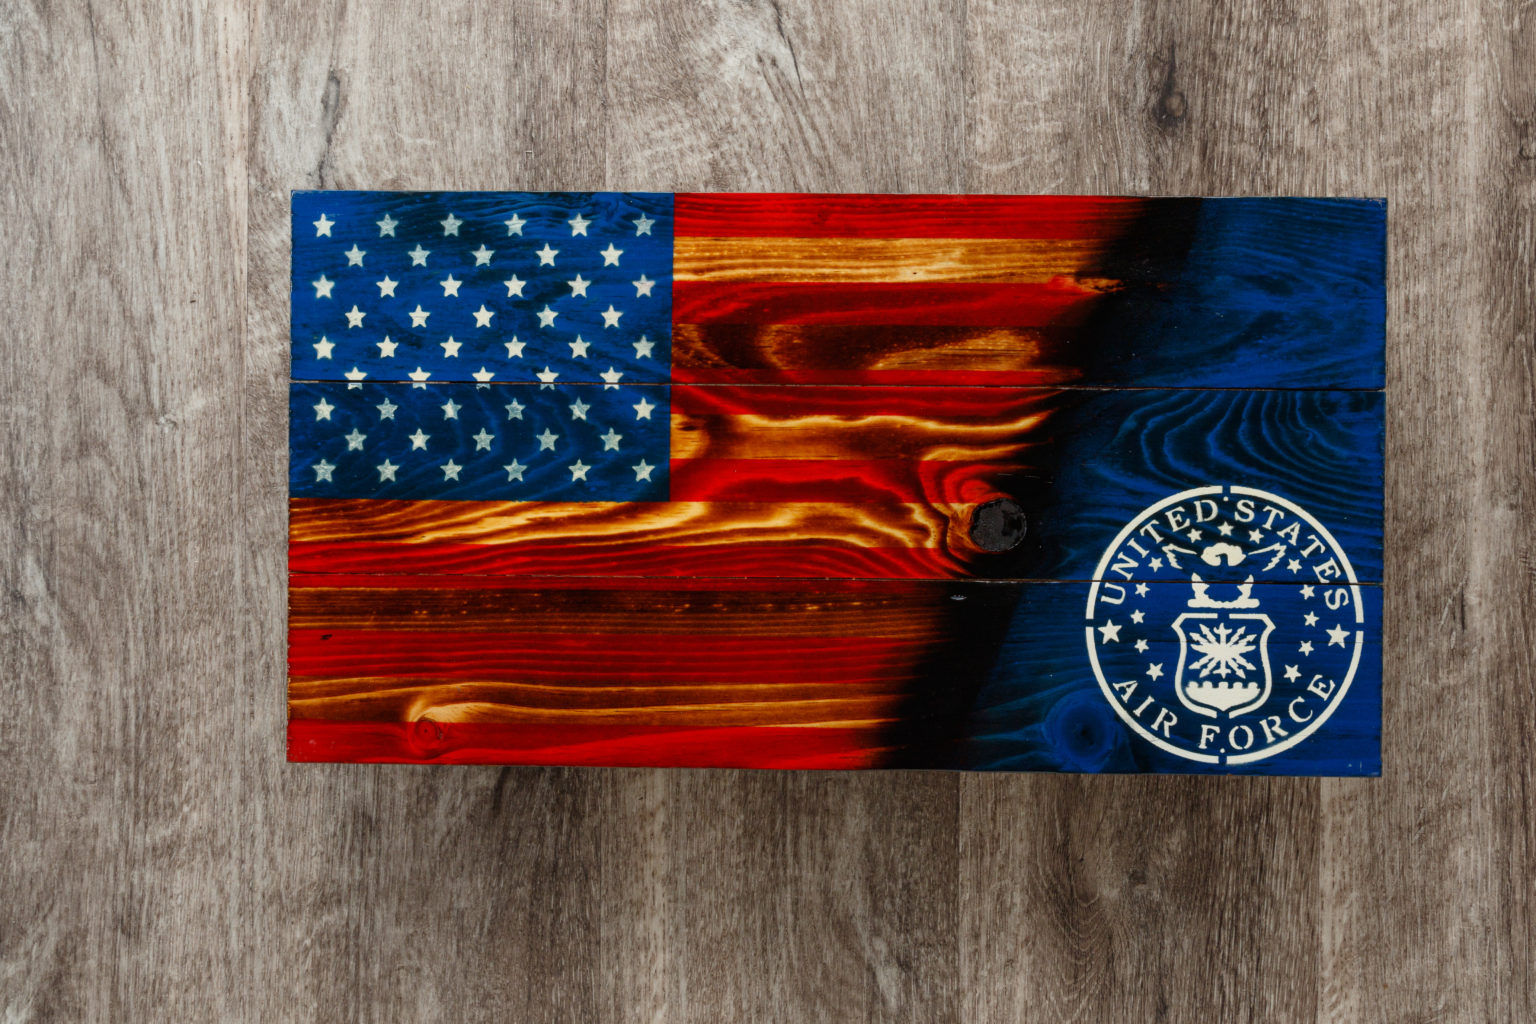 Air force wooden American flag wall art